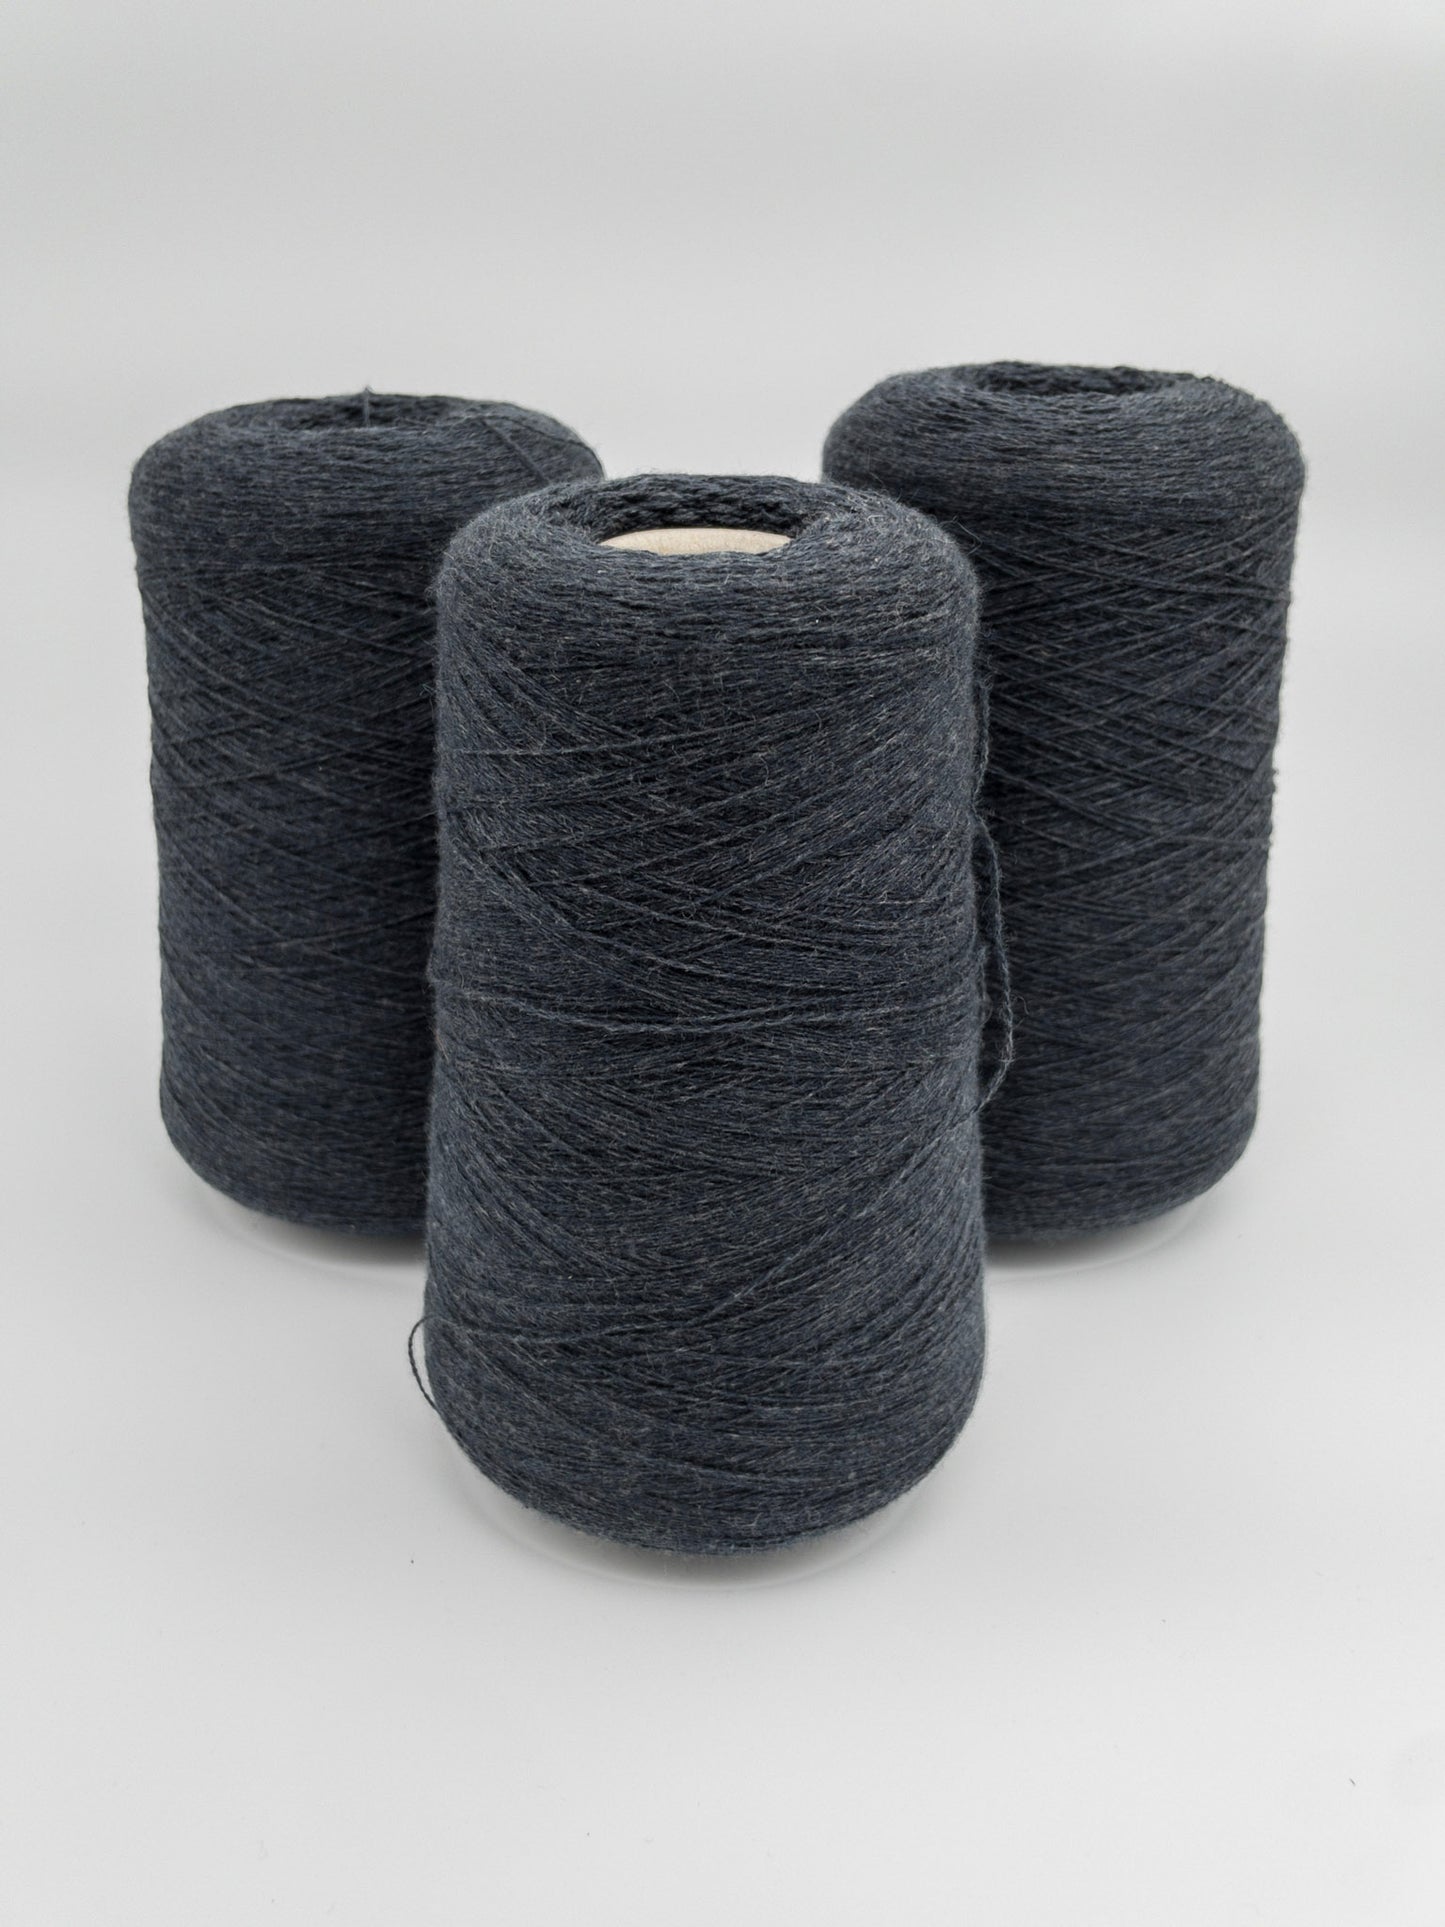 100% Cashmere Yarn - Eco Cashmere 3 Ply - Deadstock Yarn - Filati Naturali - Made in Italy - Dark Heathered Grey - Heavy Laceweight